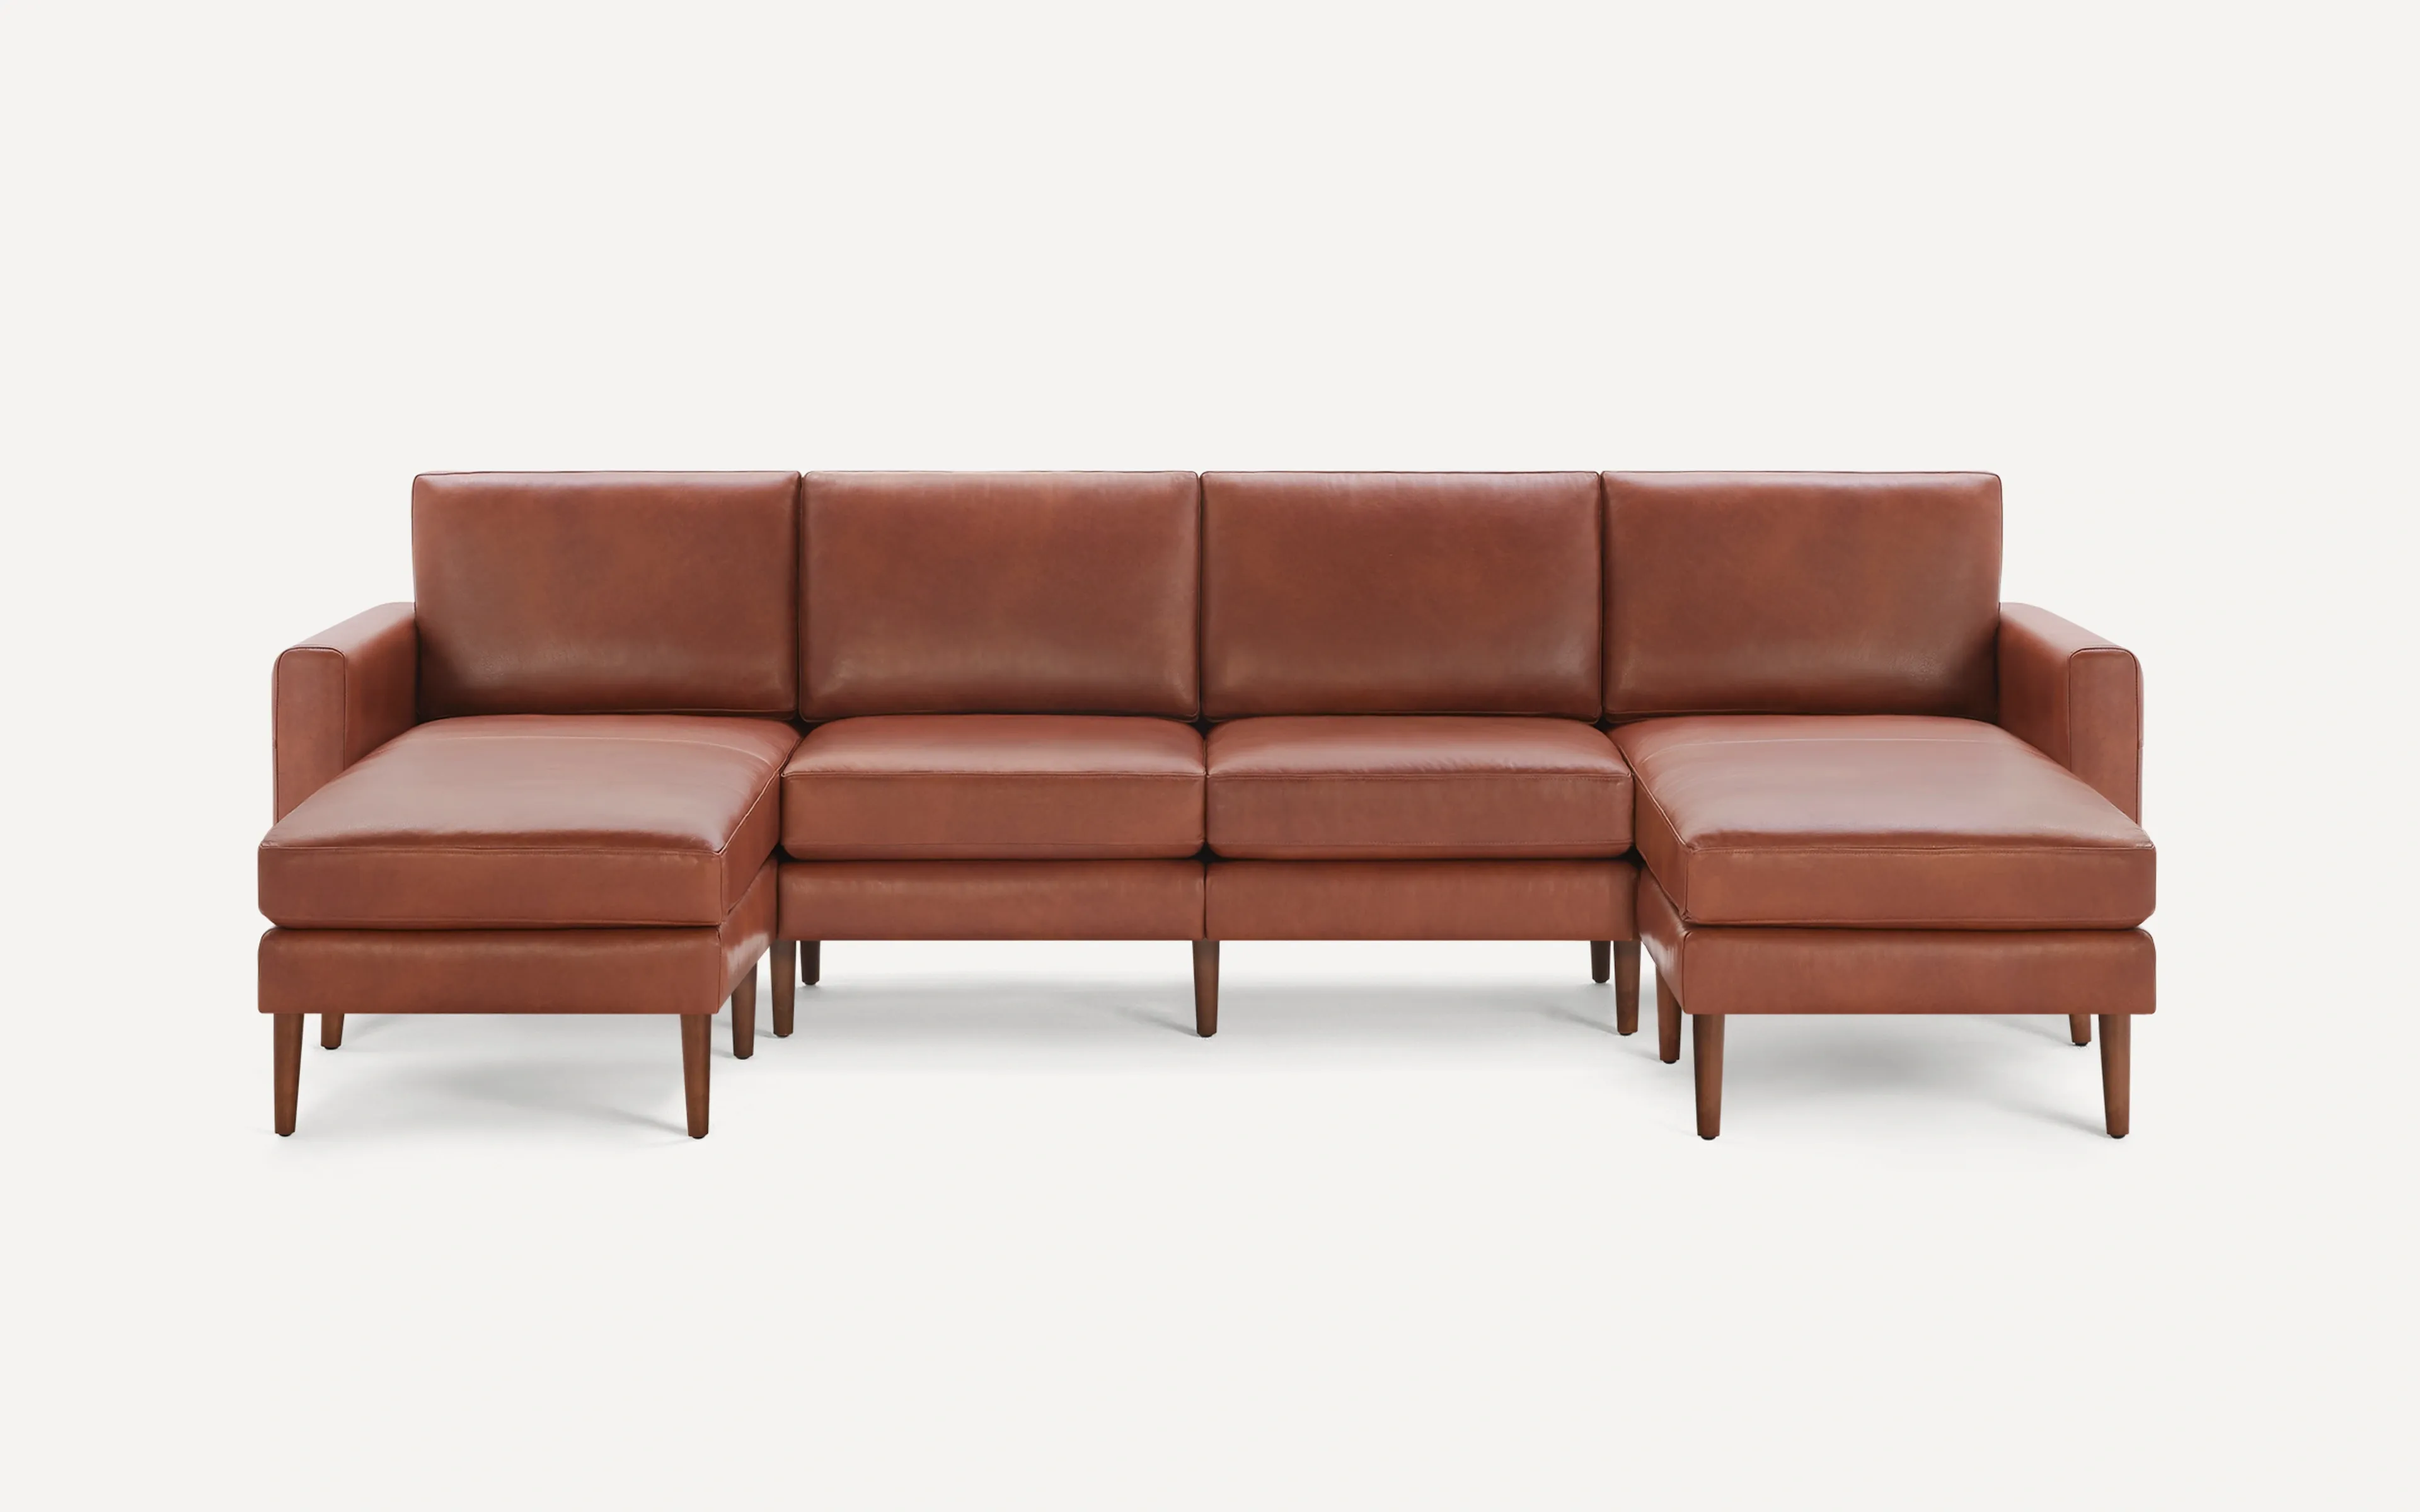 Original Nomad King Sofa in Chestnut Leather